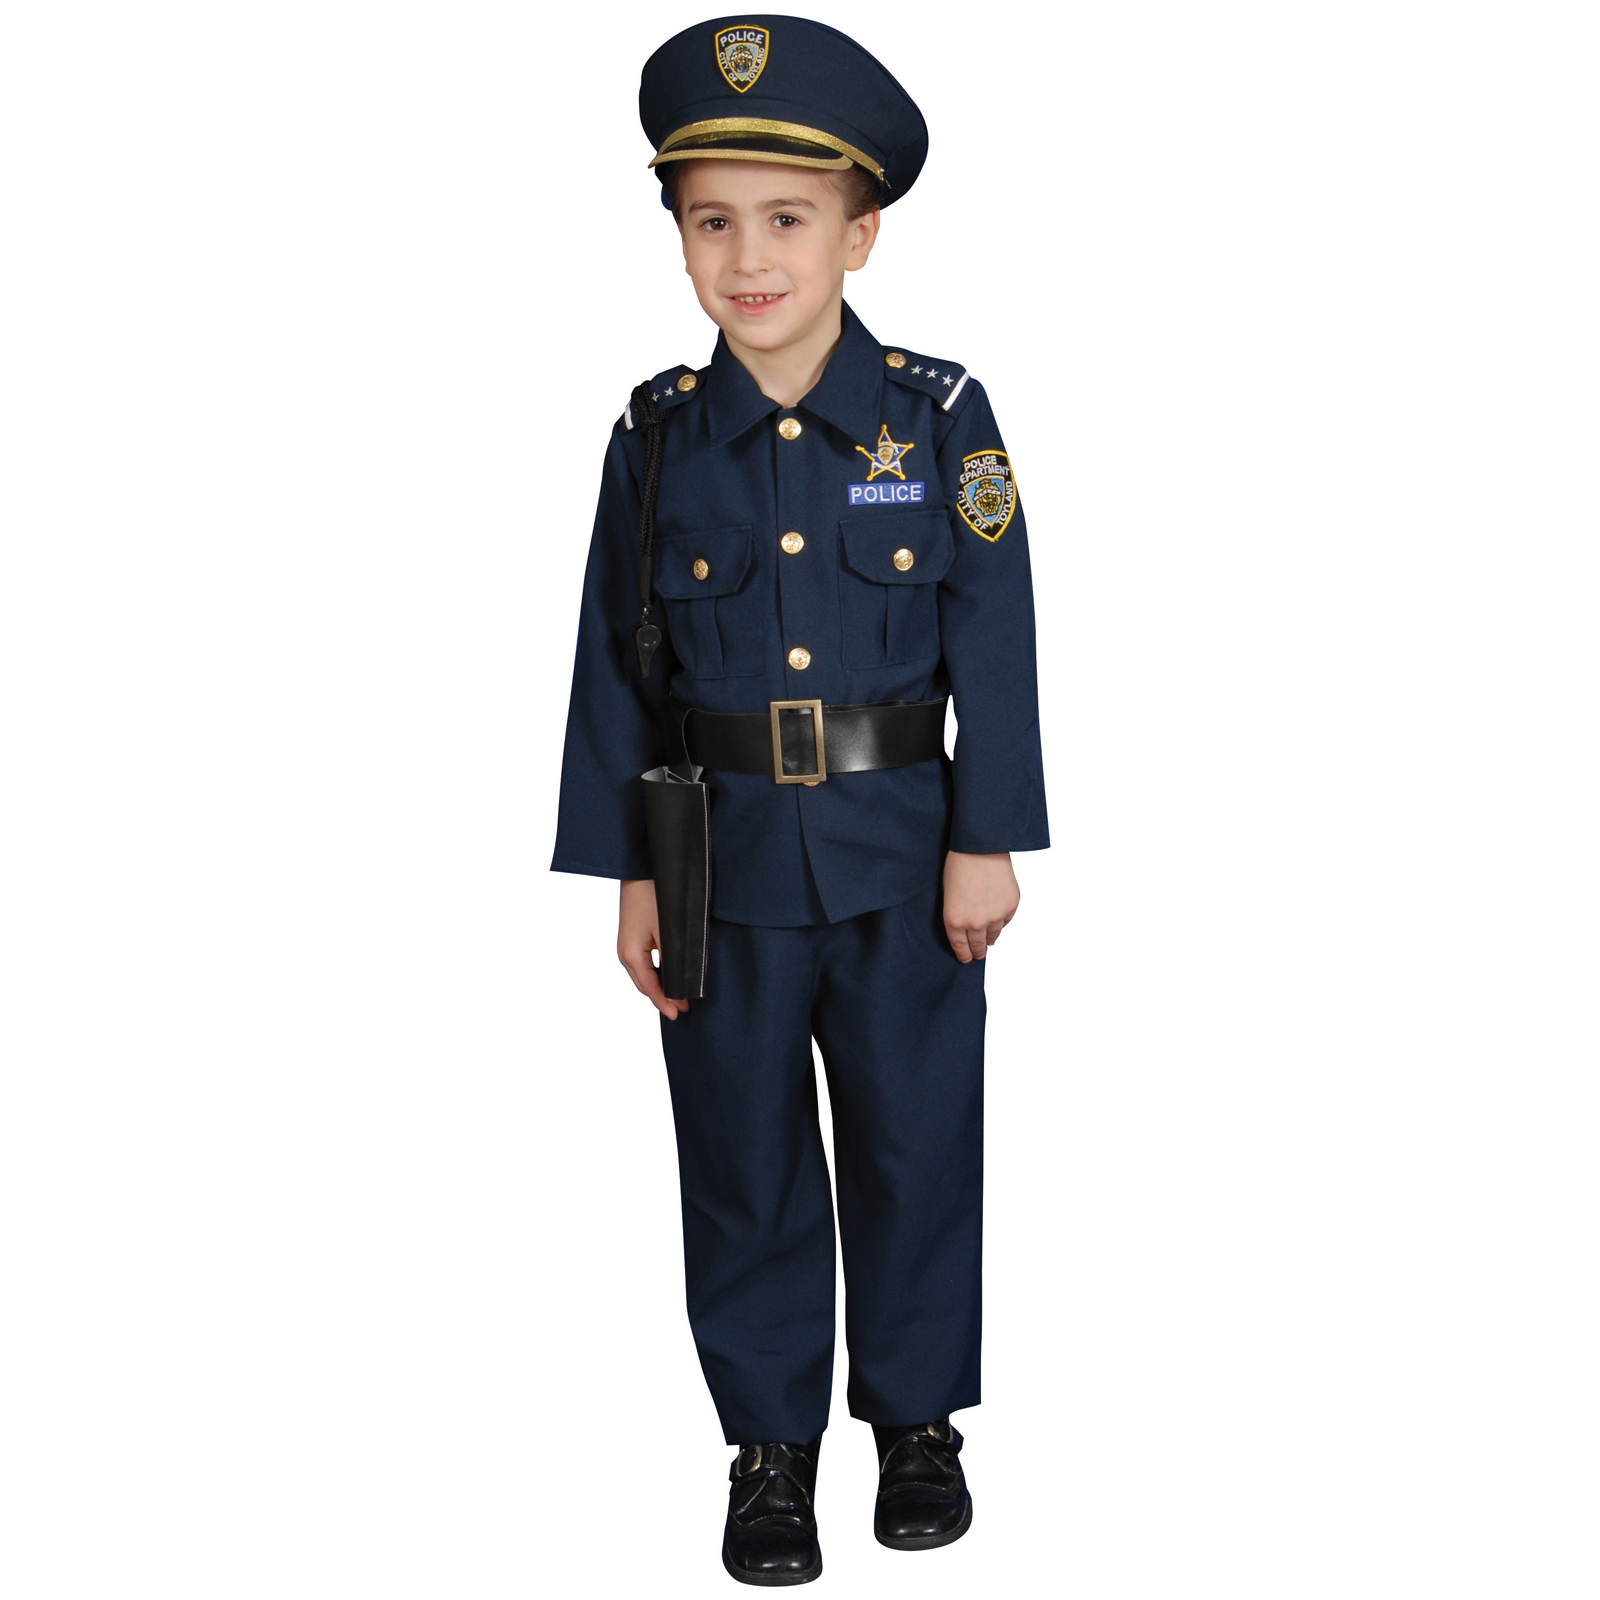 Boys Police Halloween Costume Size: M